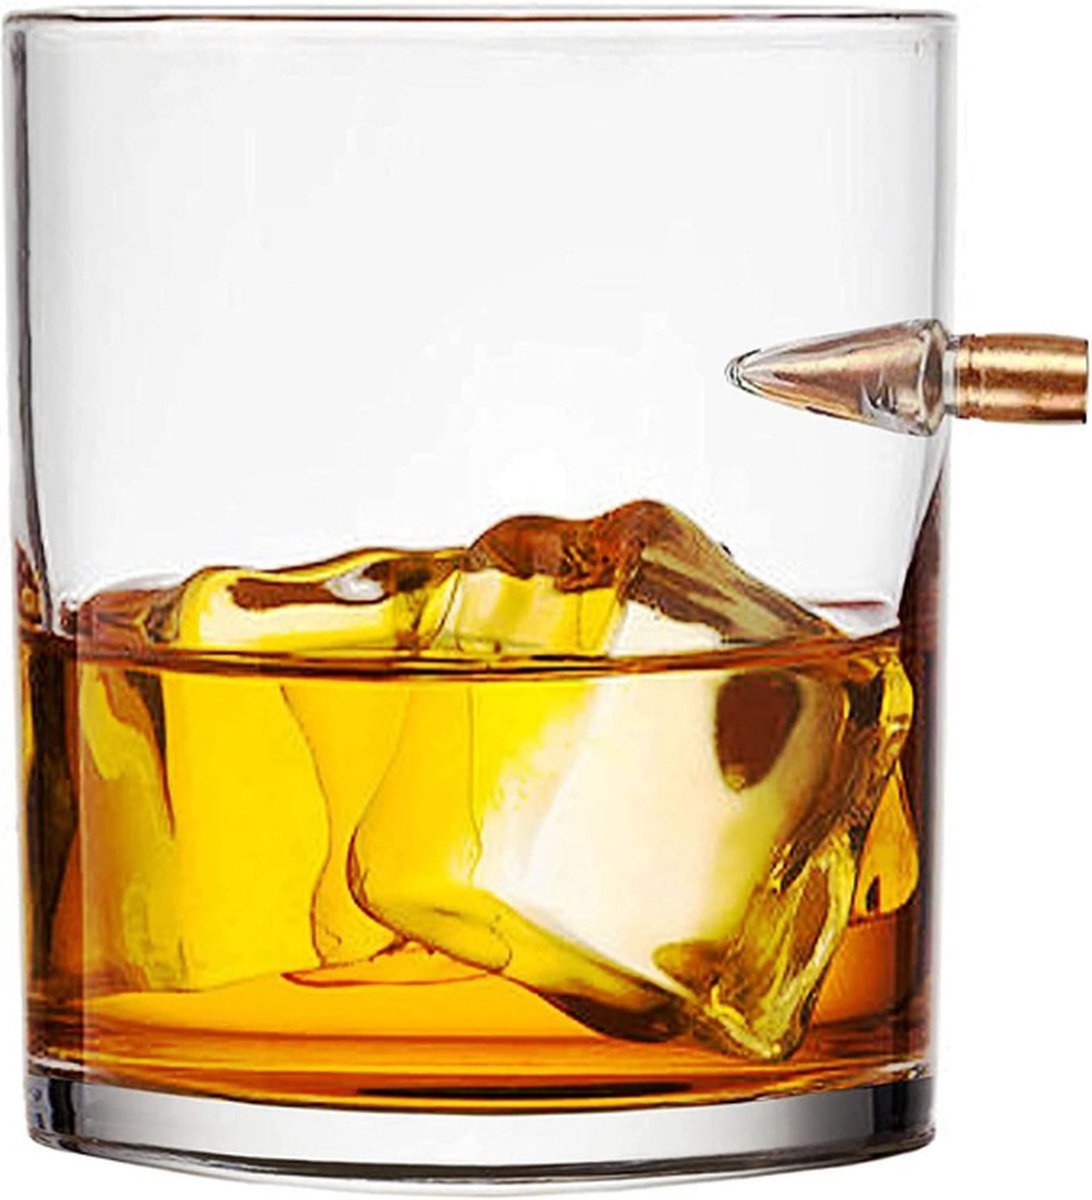 Student Company Whisky Glas - Gift Set - Kogel - 2 Glazen - Whiksey Glass - Glazen - Bullet glasses - Peakyblinders